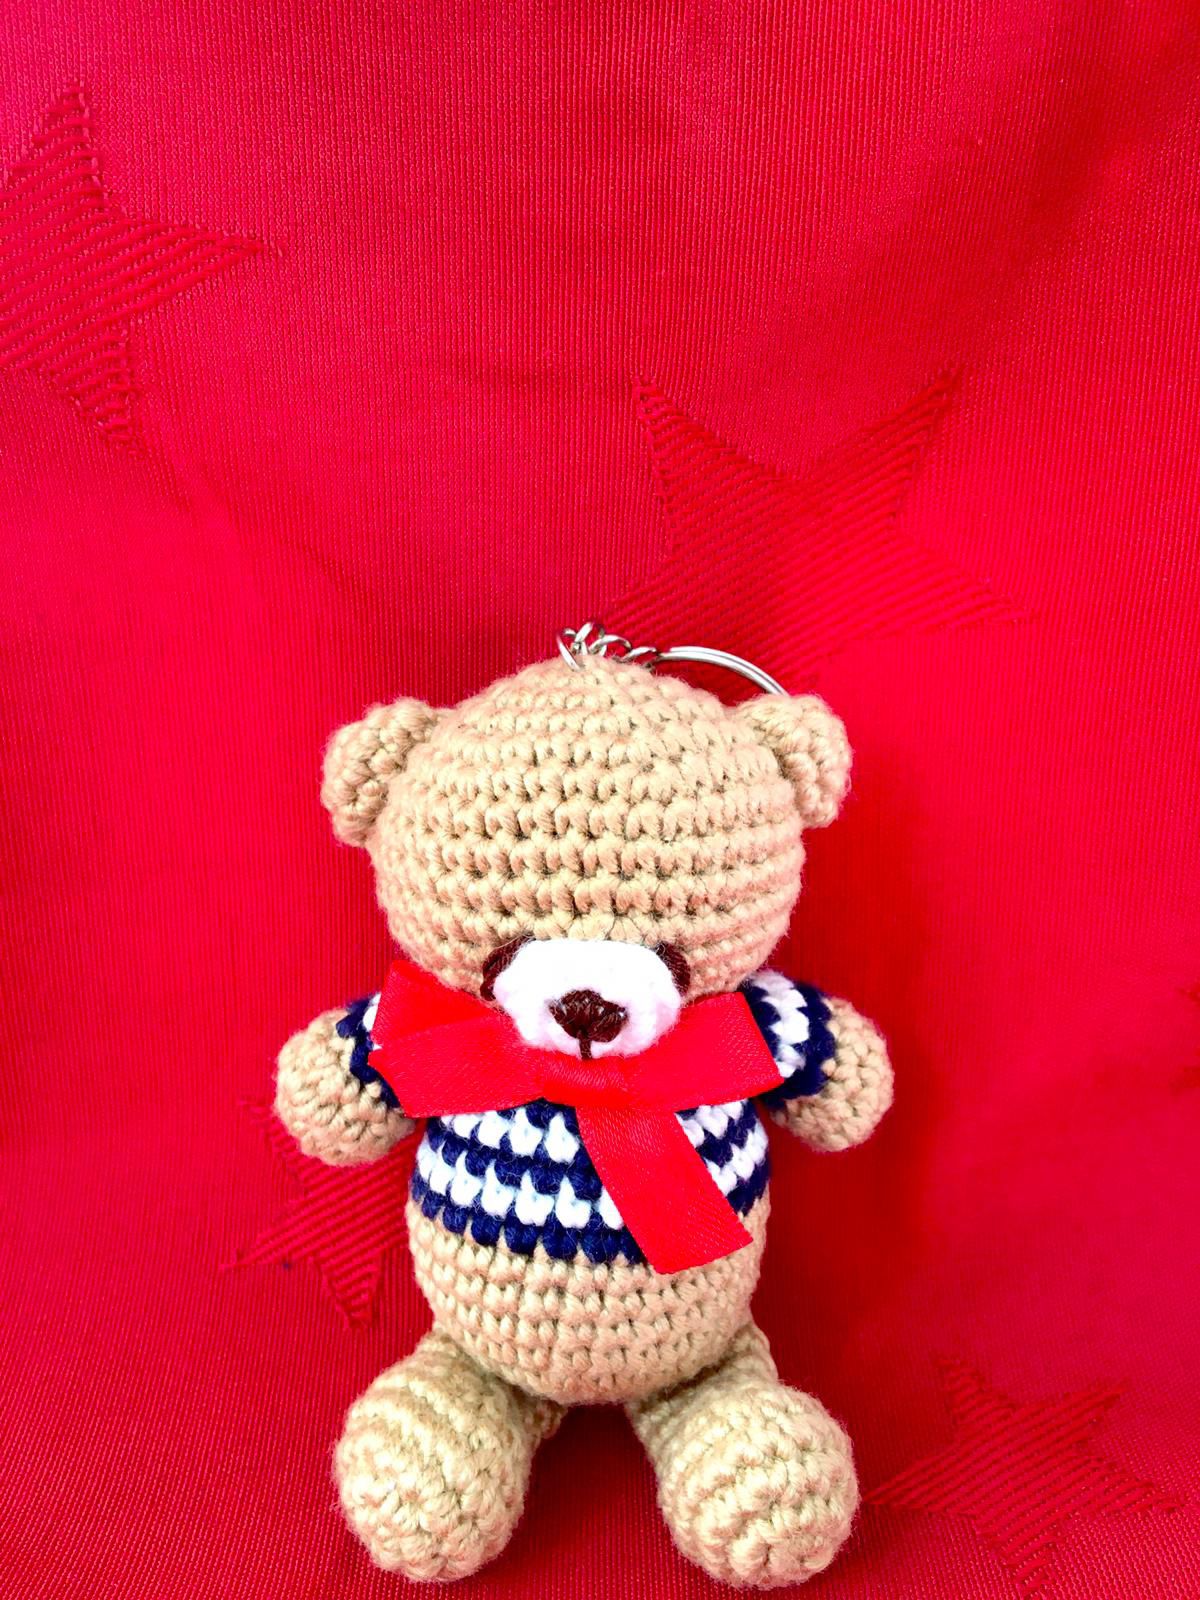 Teddy Bear Key Chain|Amigurumi Toys|Handmade Toys|Stuffed Animal|Crochet Toy